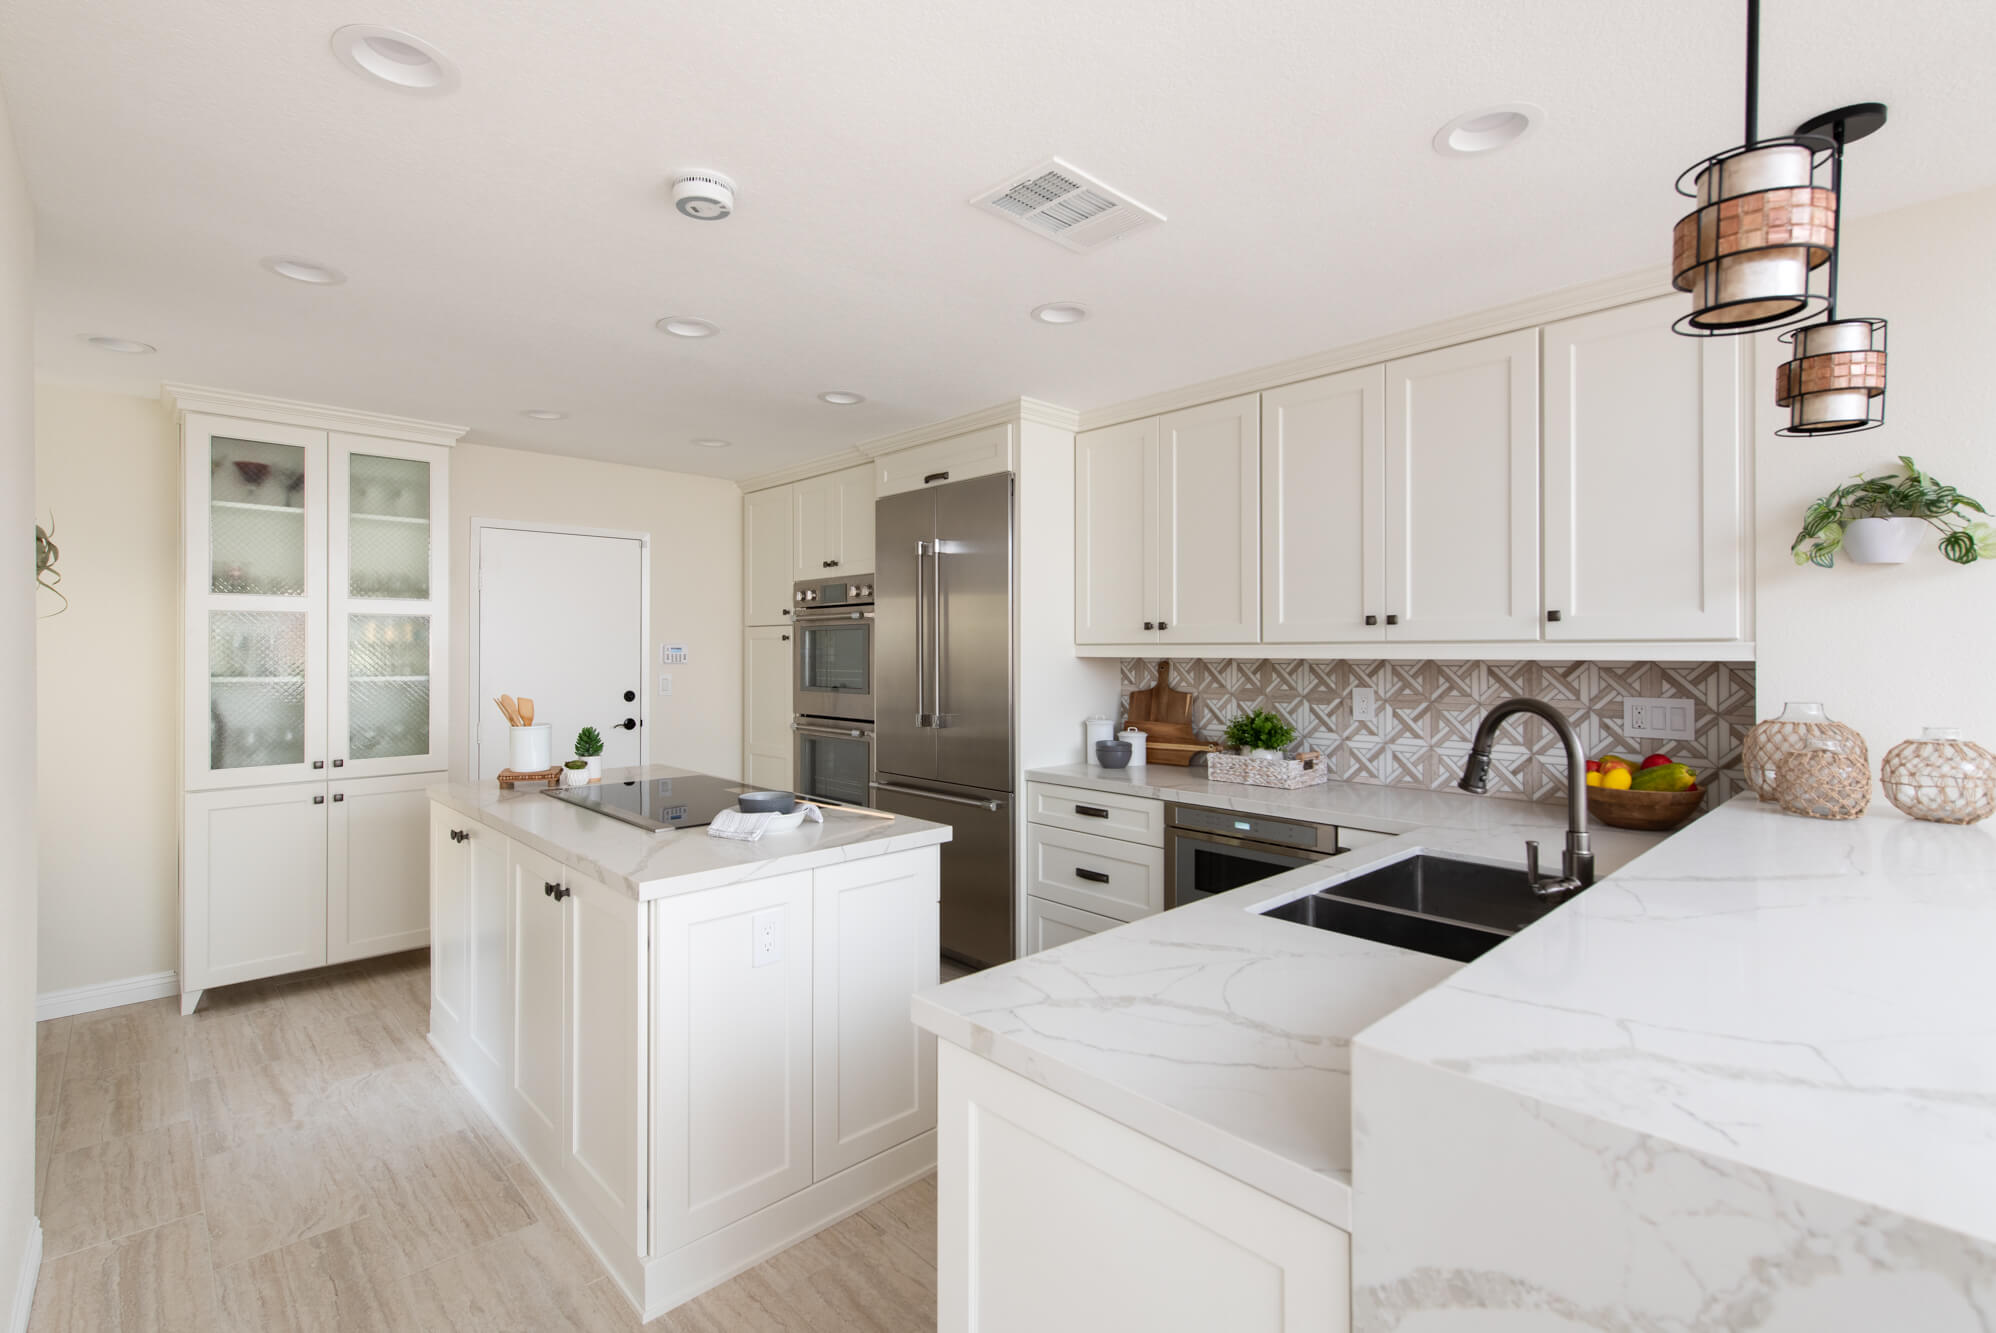 Newport Beach Kitchen Remodel With New Cabinets Countertops Backsplash Lighting